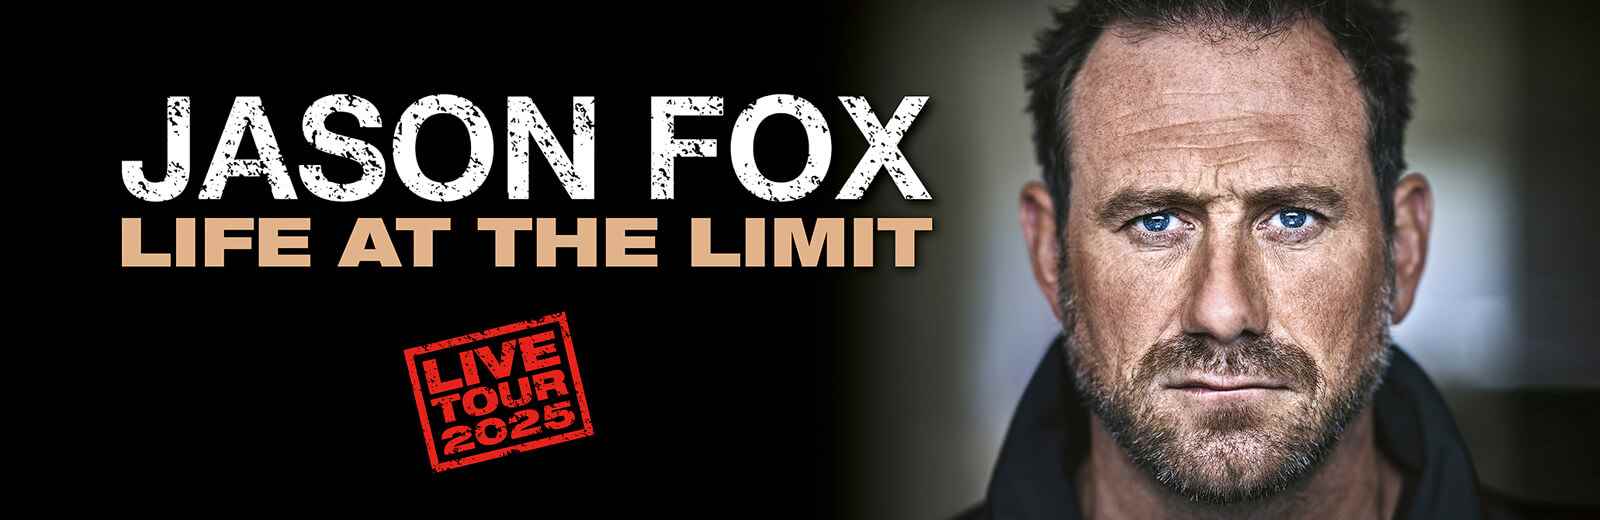 Jason Fox - Life At The Limit